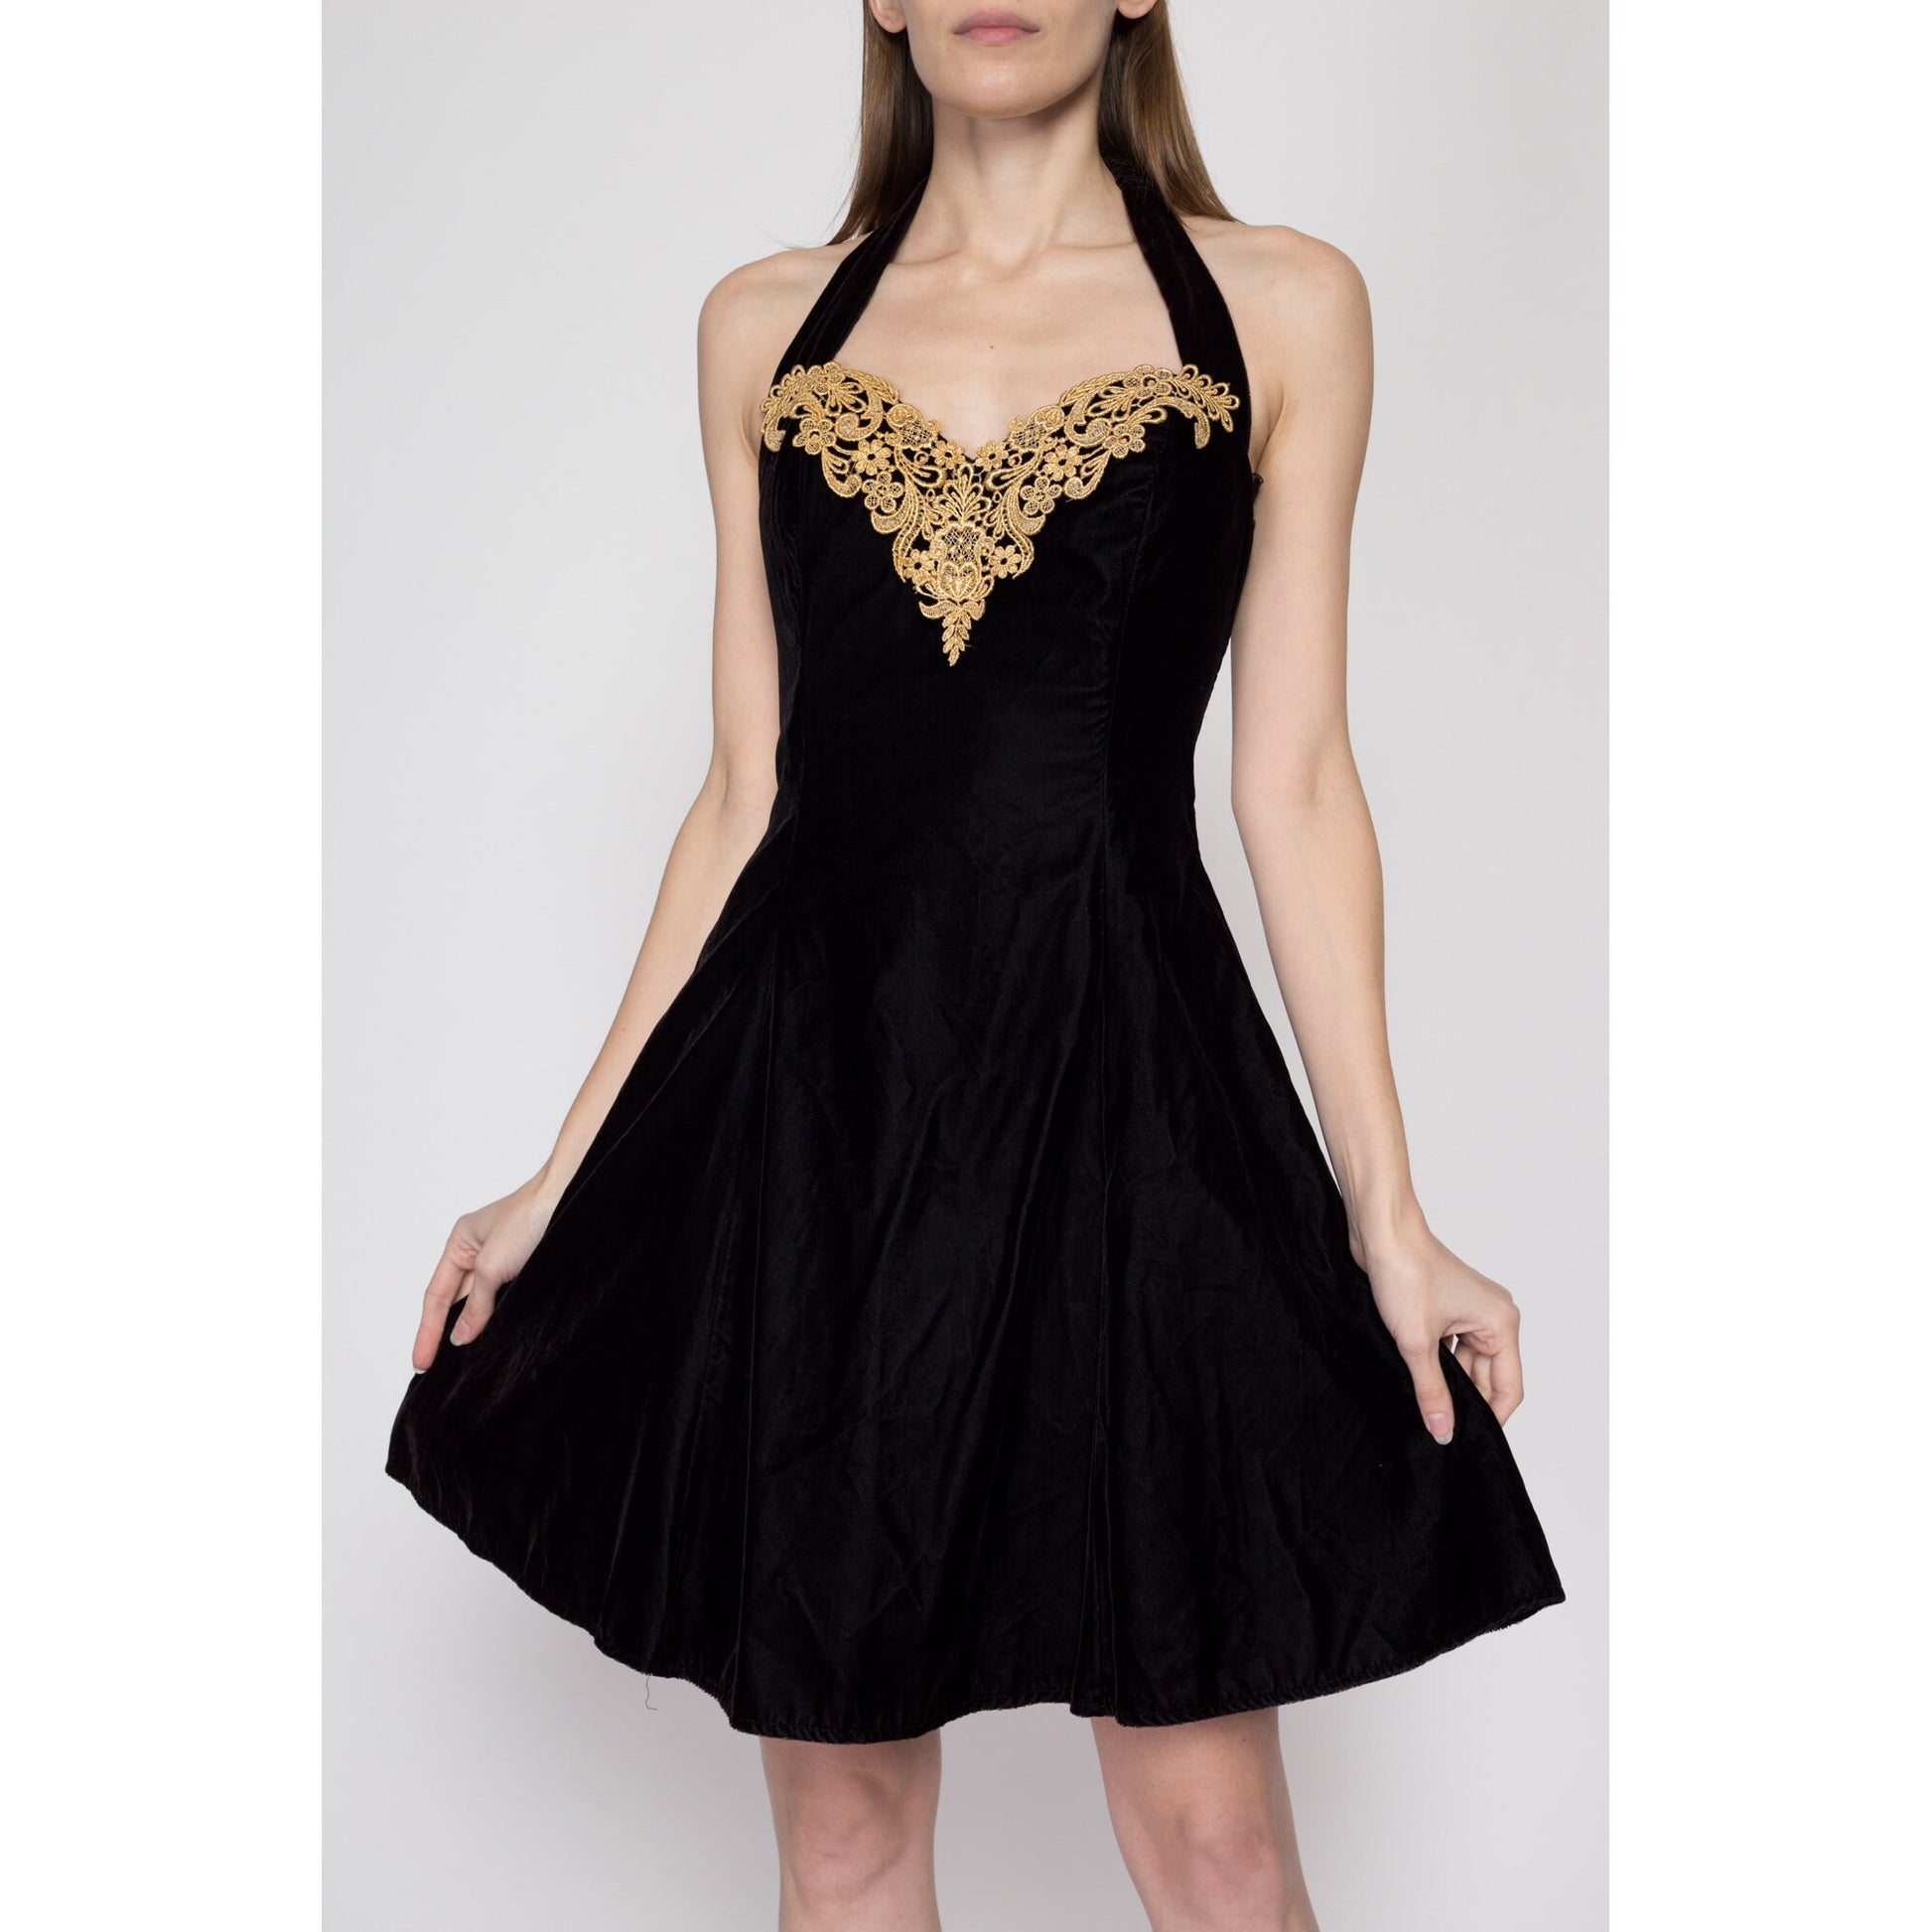 Medium 80s Black Velvet Halter Party Dress | Vintage Fit & Flare Gold Trim Low Back Mini Prom Dress